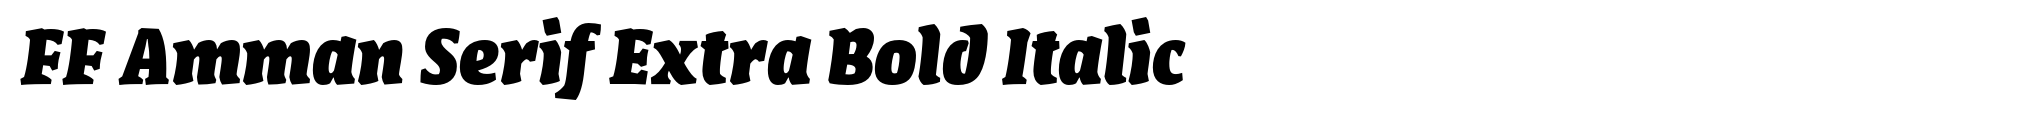 FF Amman Serif Extra Bold Italic image